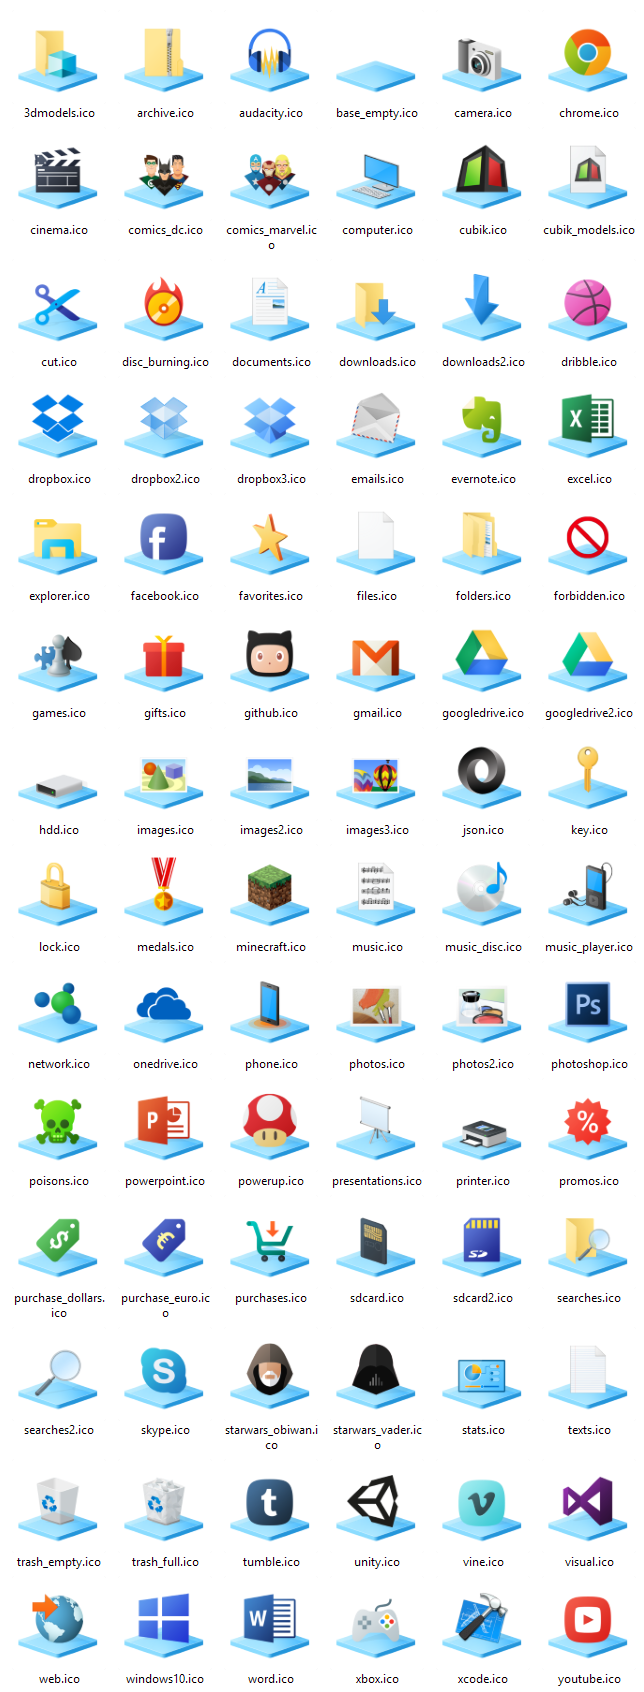 Windows Libraries Icons By Sphaxcs On Deviantart Vrogue